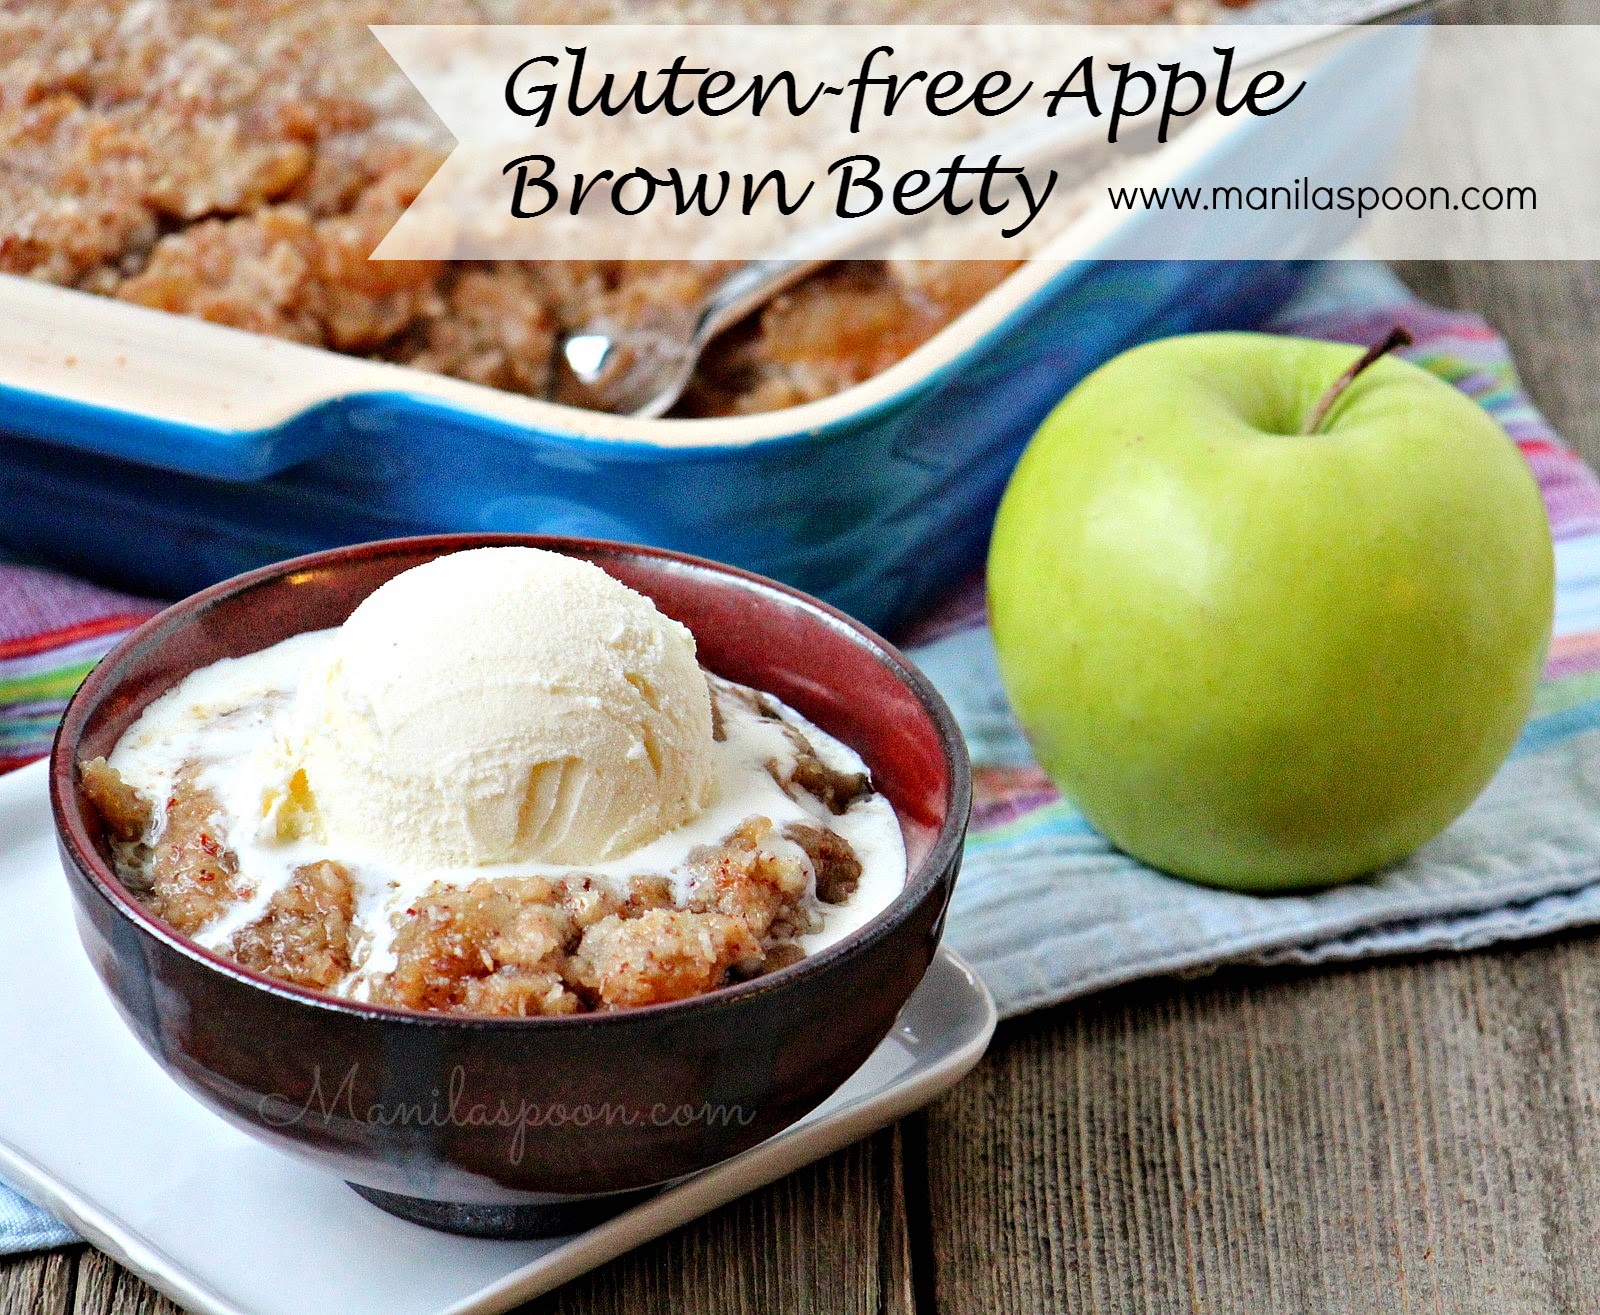 Gluten-free Apple Brown Betty